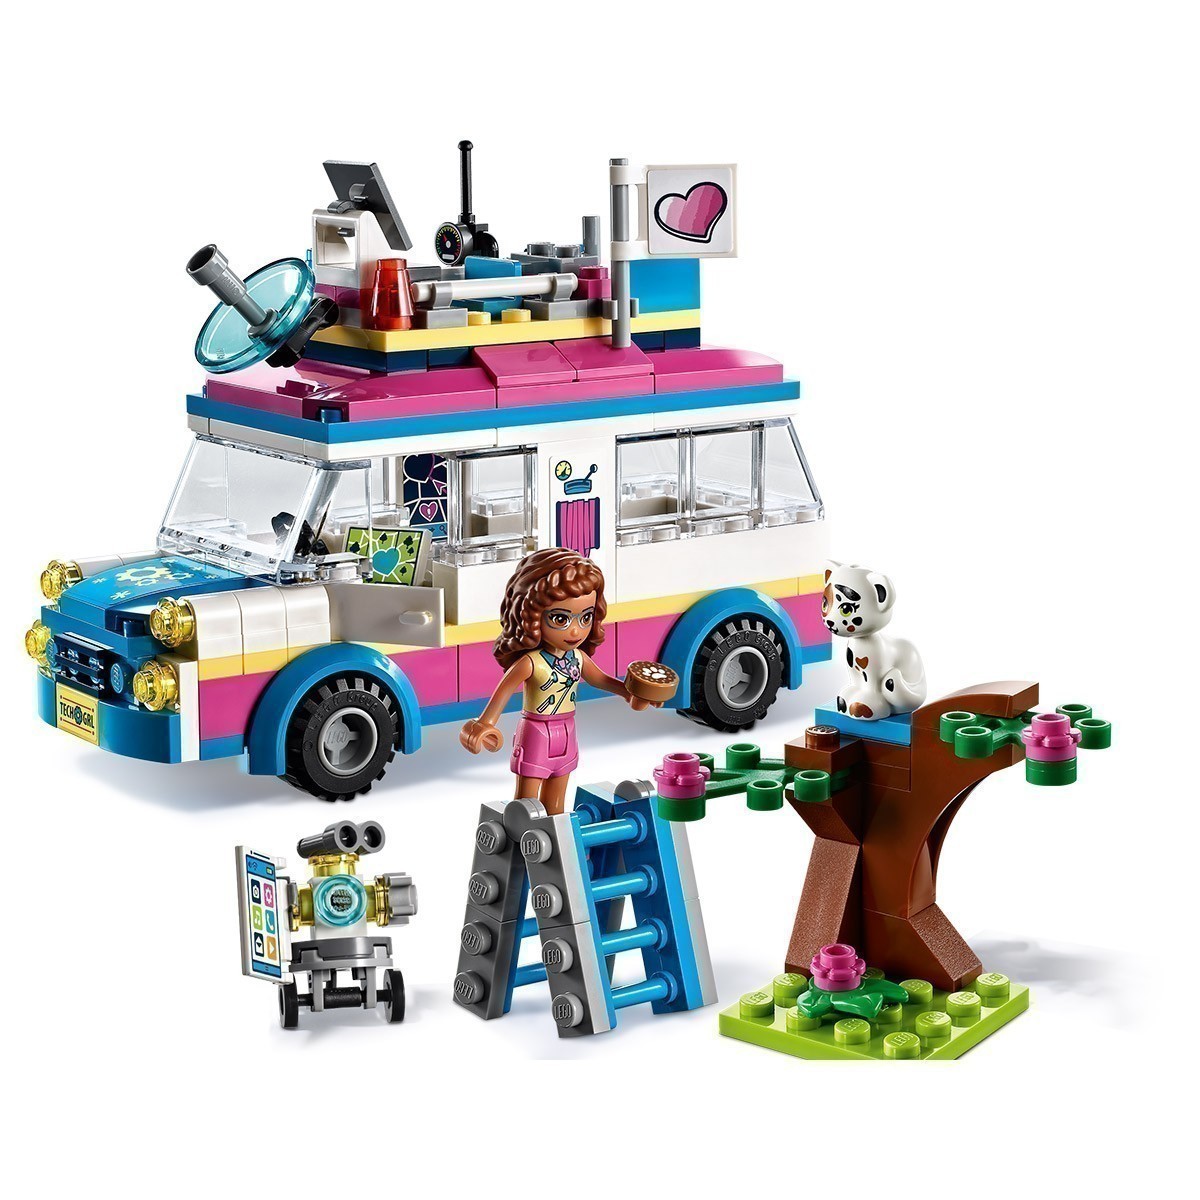 LEGO Friends 41333 - Olivia's Mission Vehicle